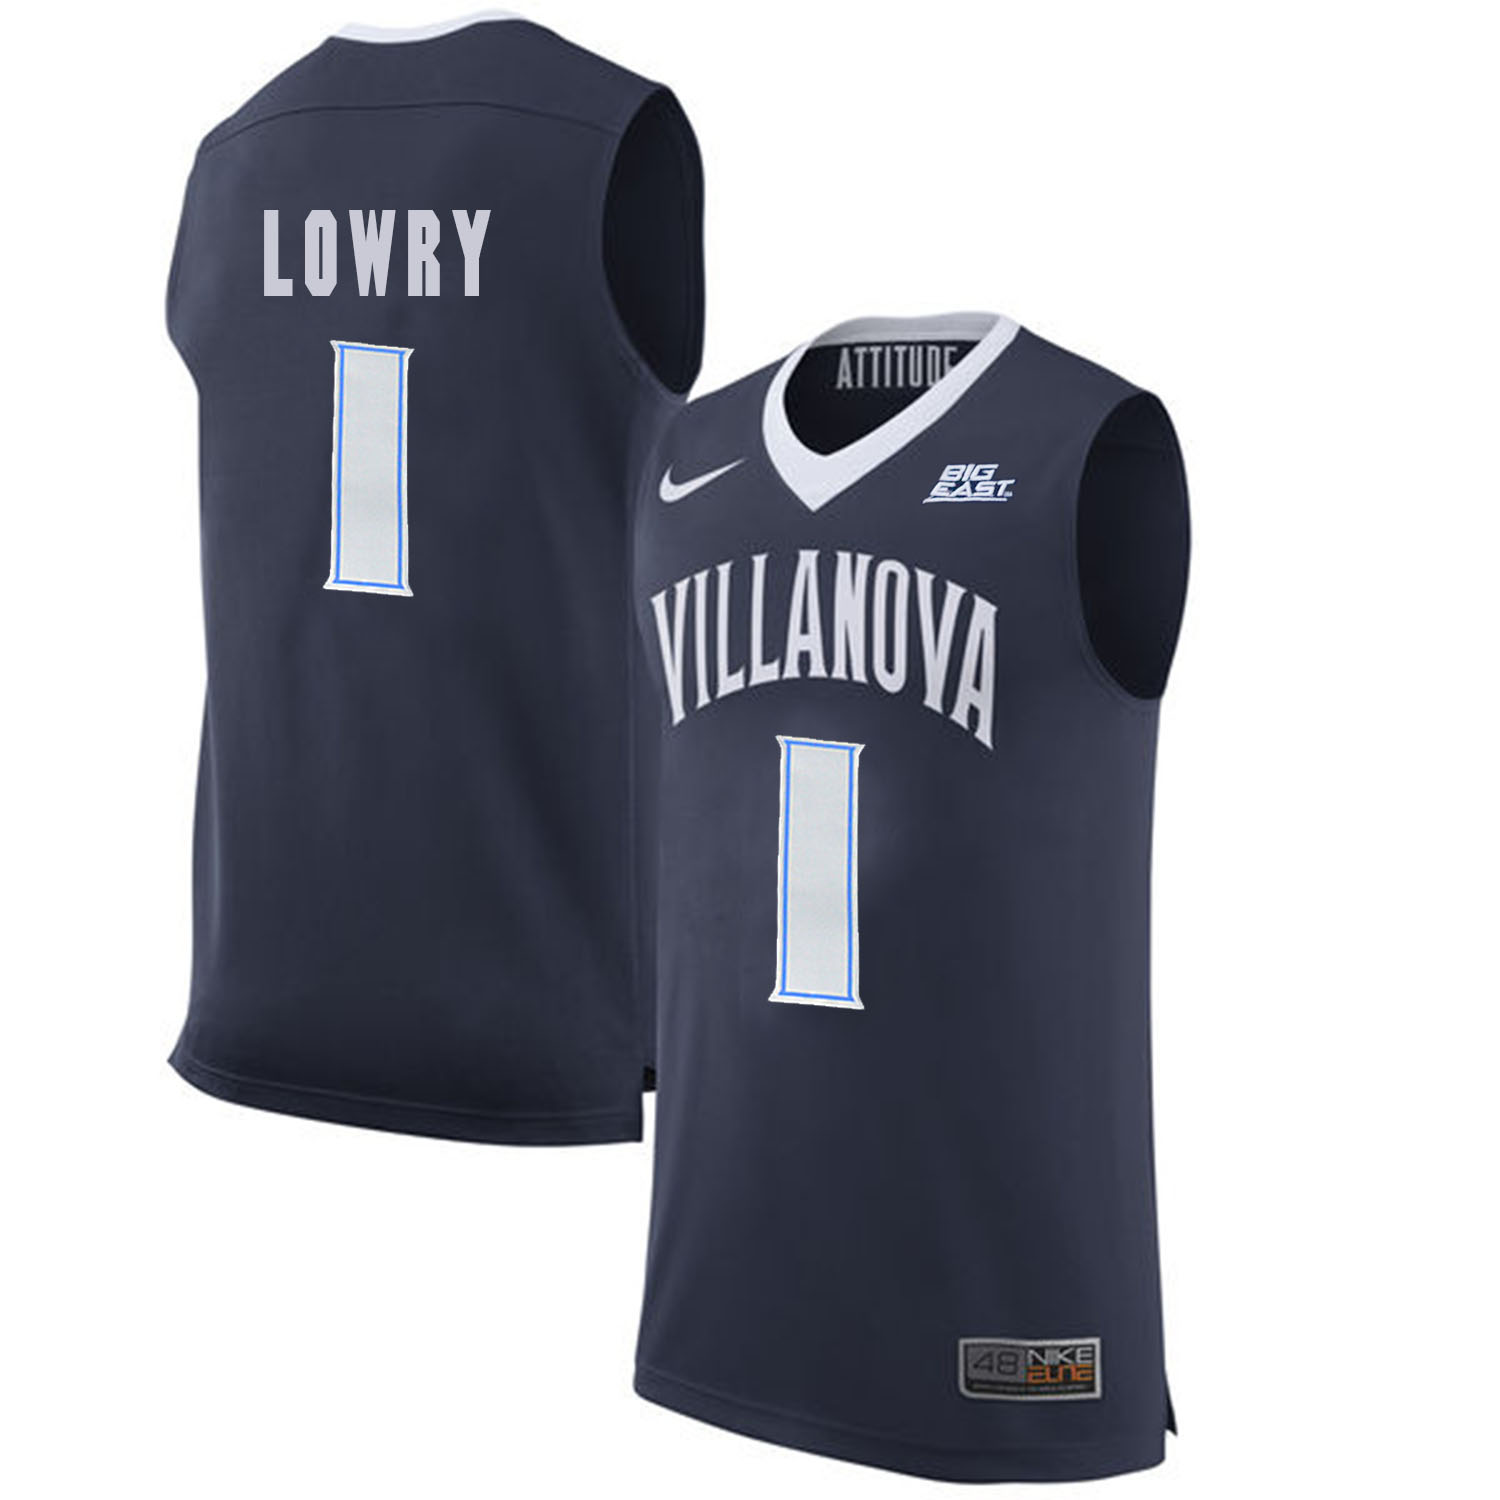 Villanova Wildcats 1 Kyle Lowry Navy College Basketball Elite Jersey